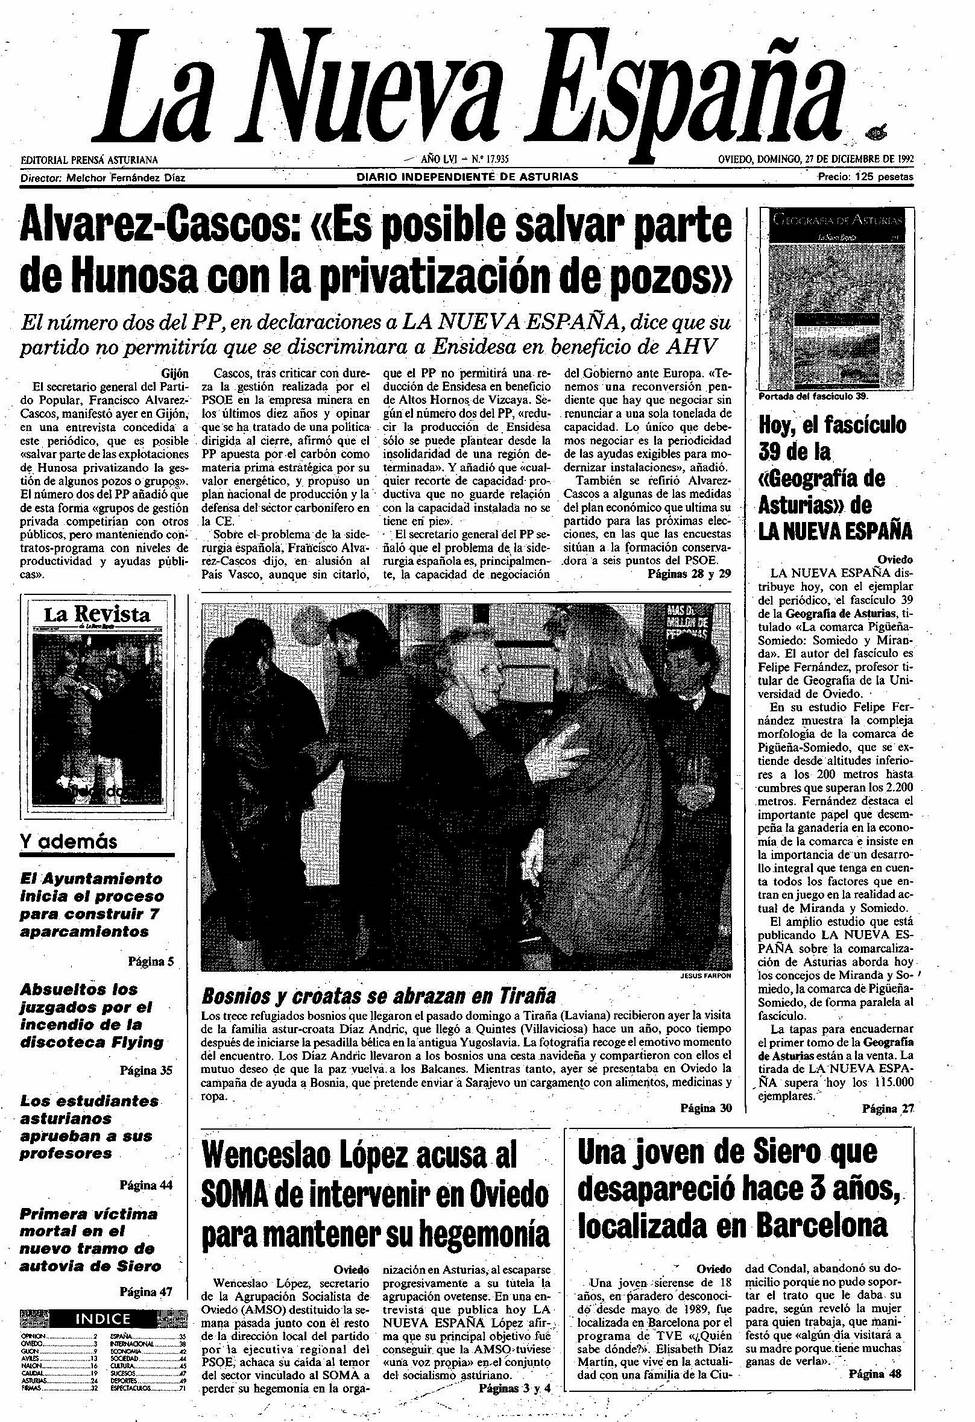 Portada del Domingo, 27 de Diciembre de 1992